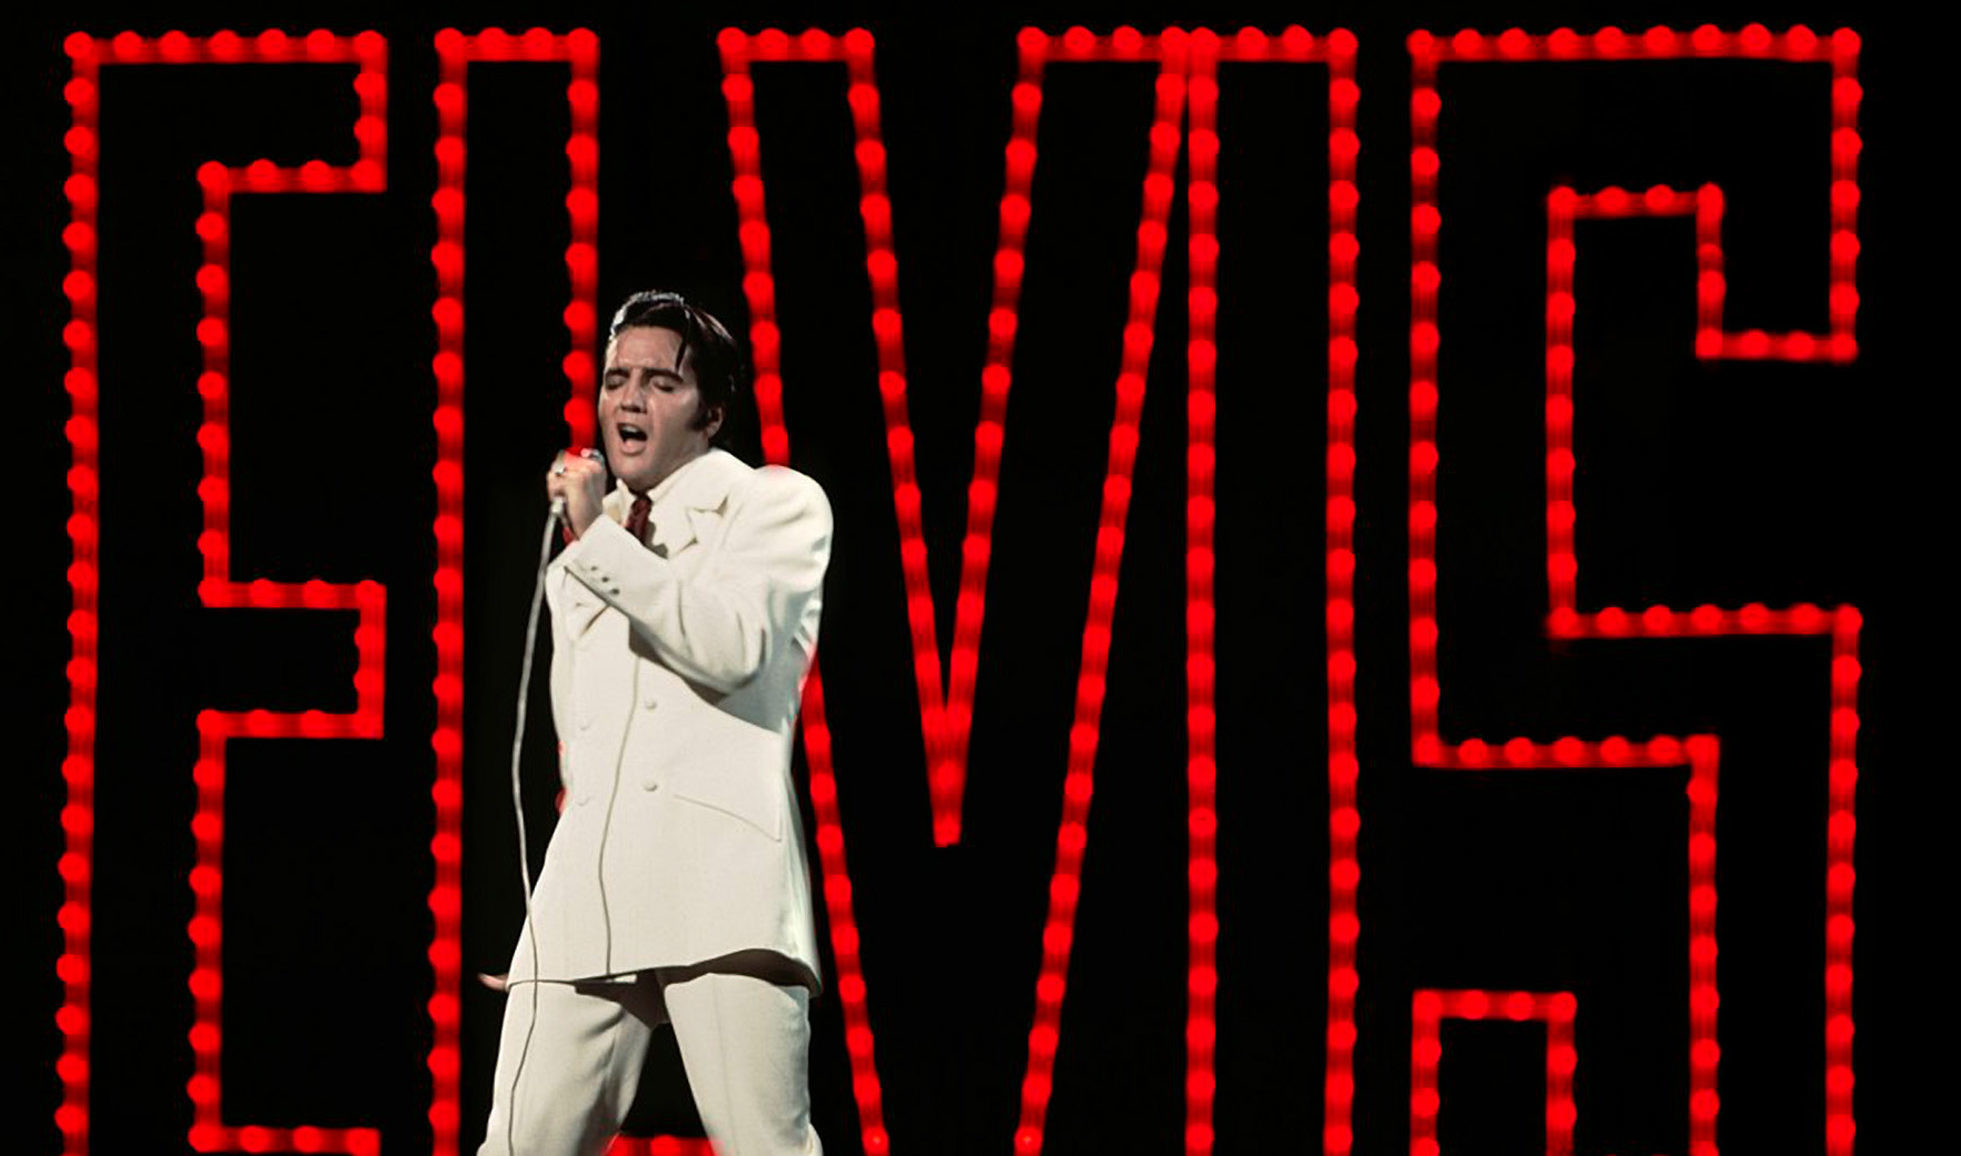 Elvis Presley as he performs on stage